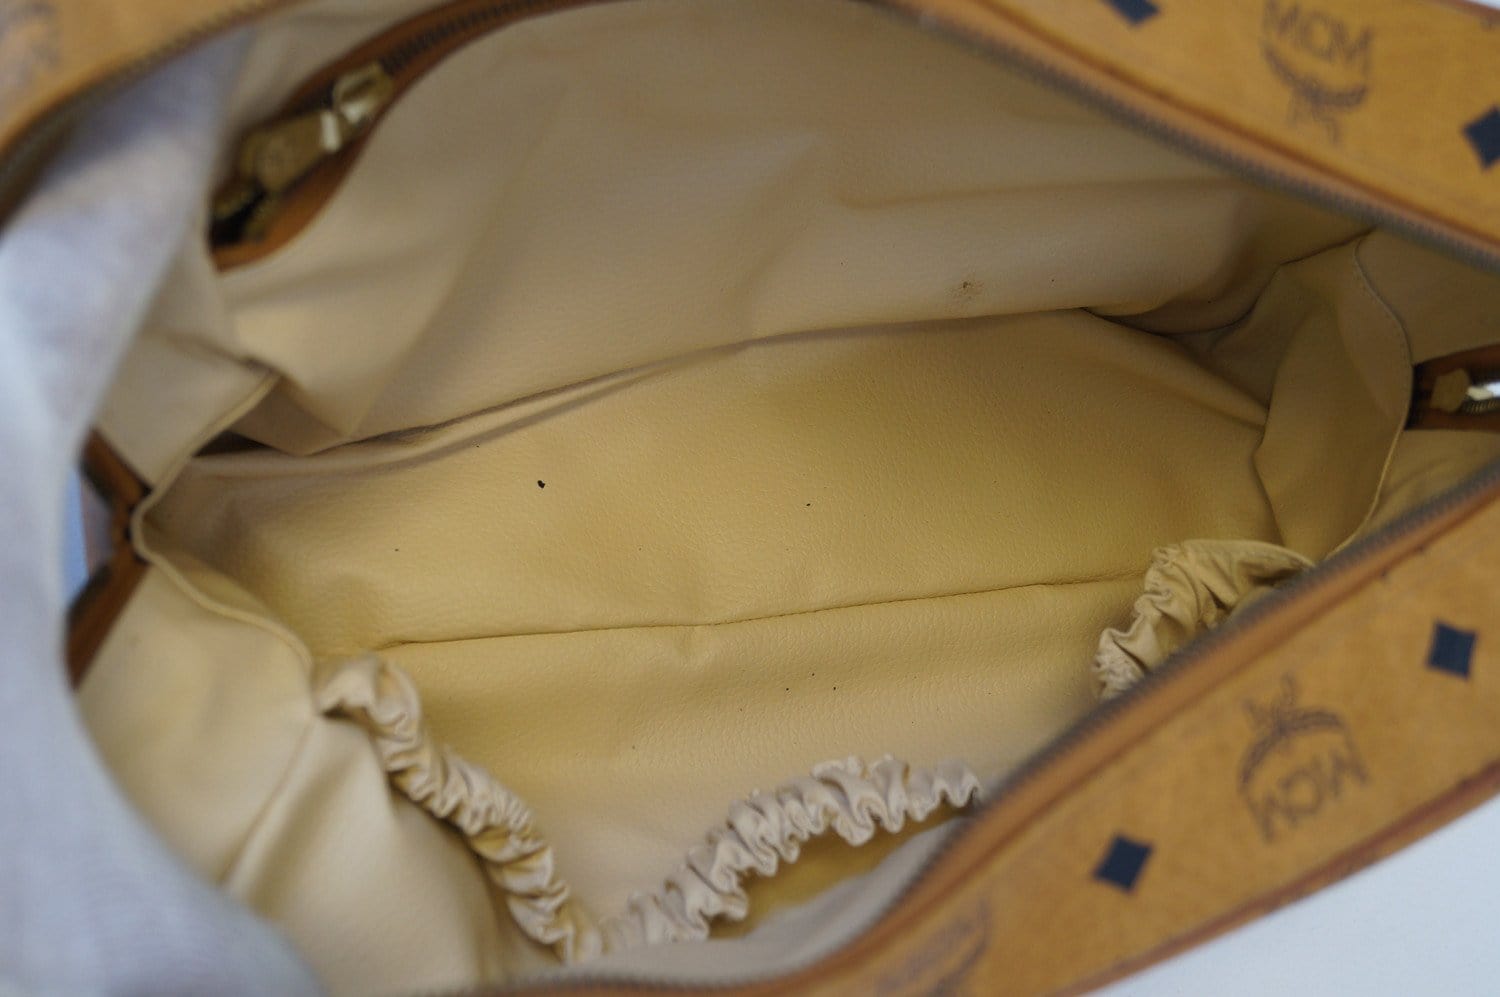 Wanna Wanna Wednesday: Vintage Gold Bucket Bag from Sseko Designs 